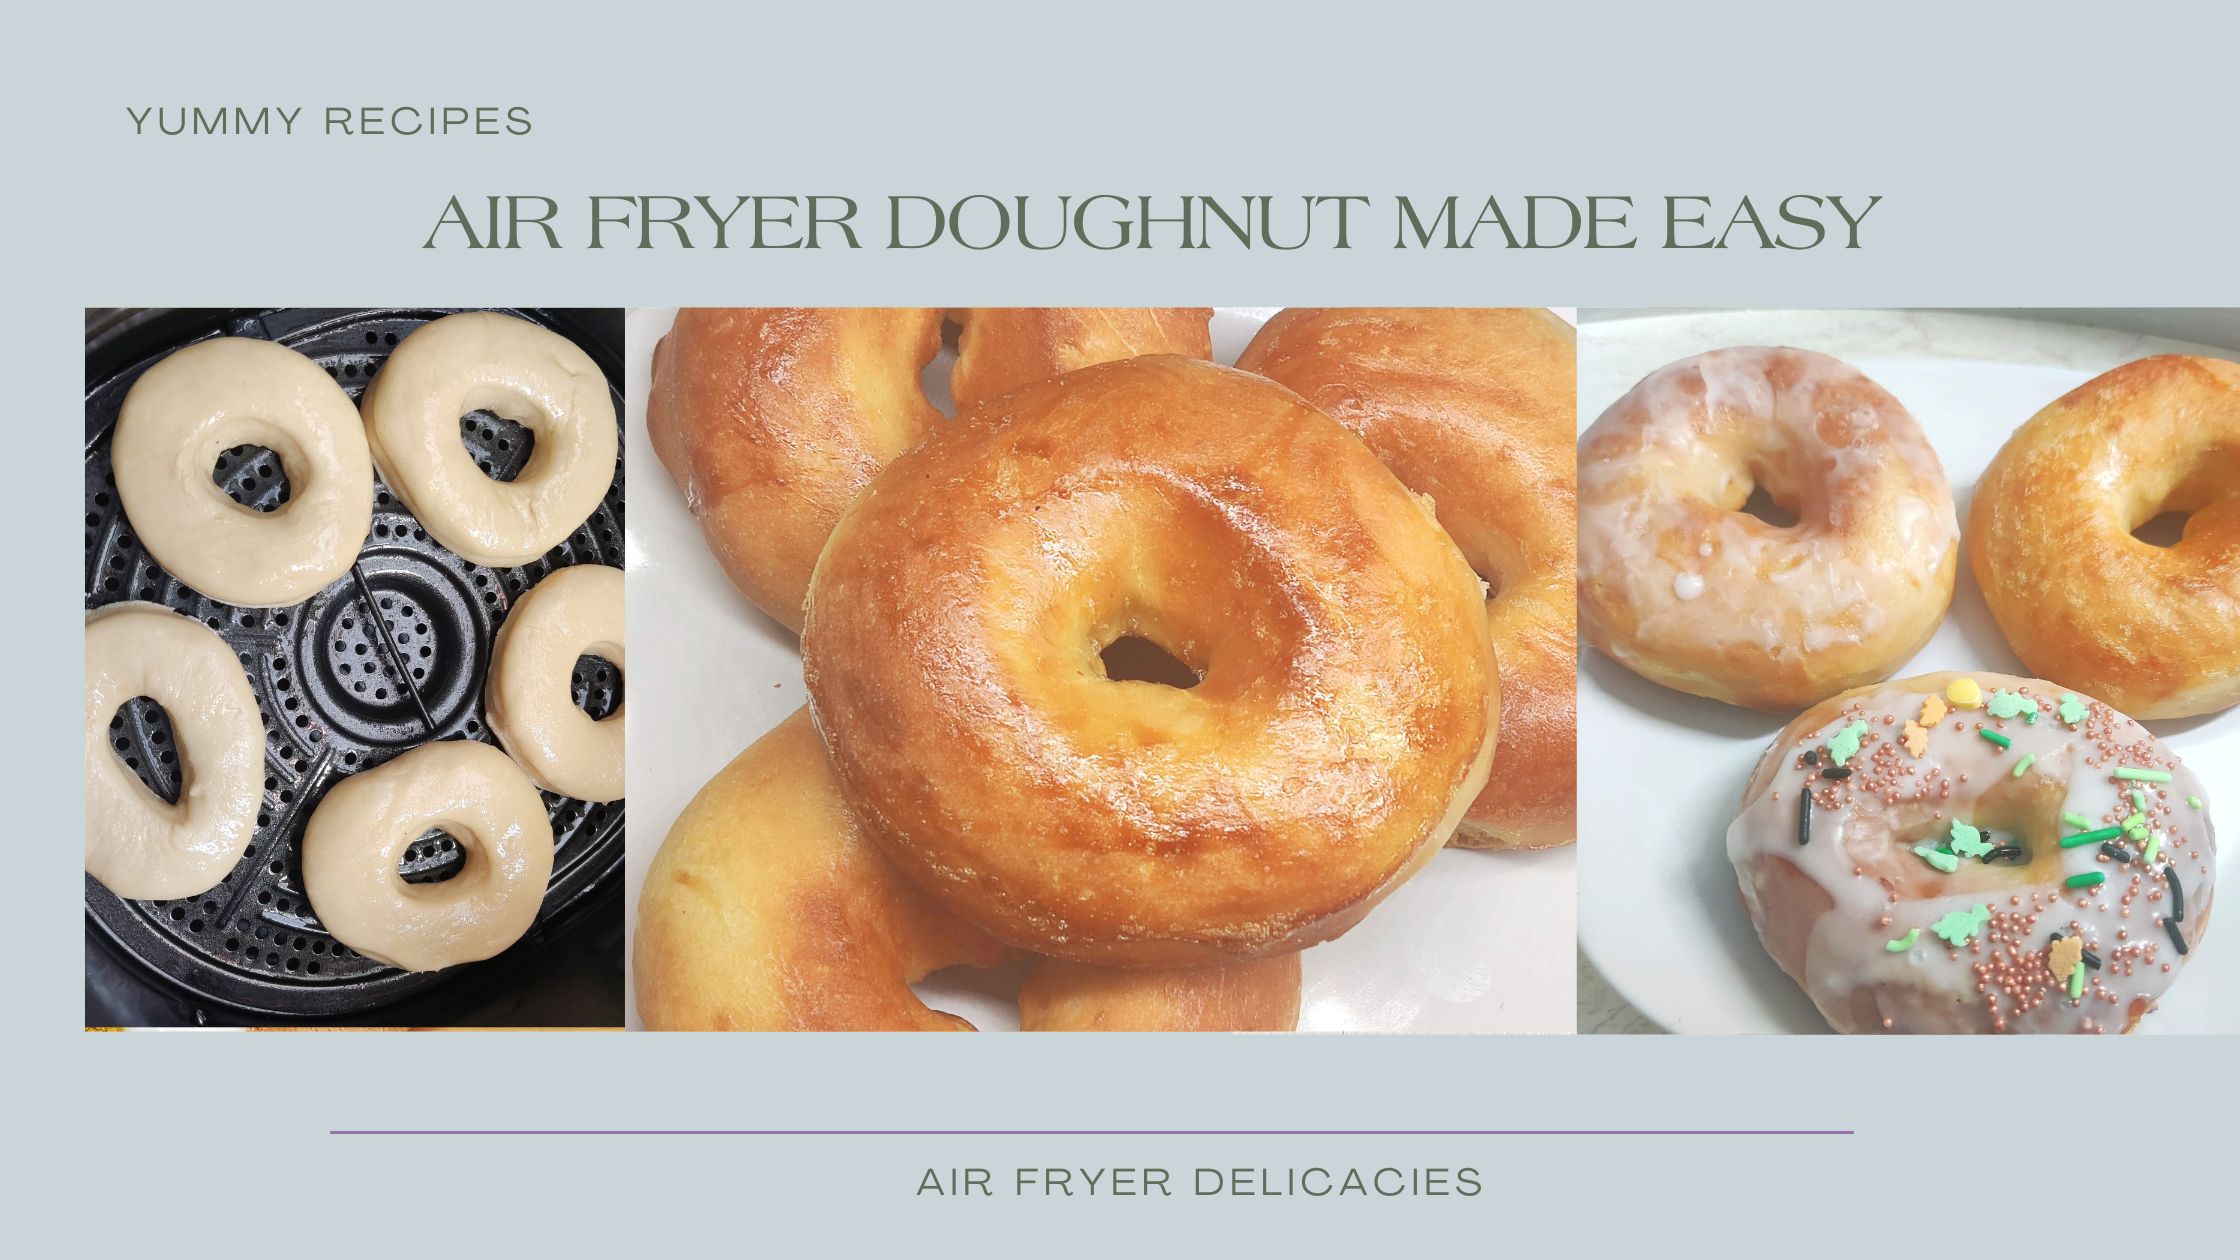 Air Fryer Doughnut made easy!